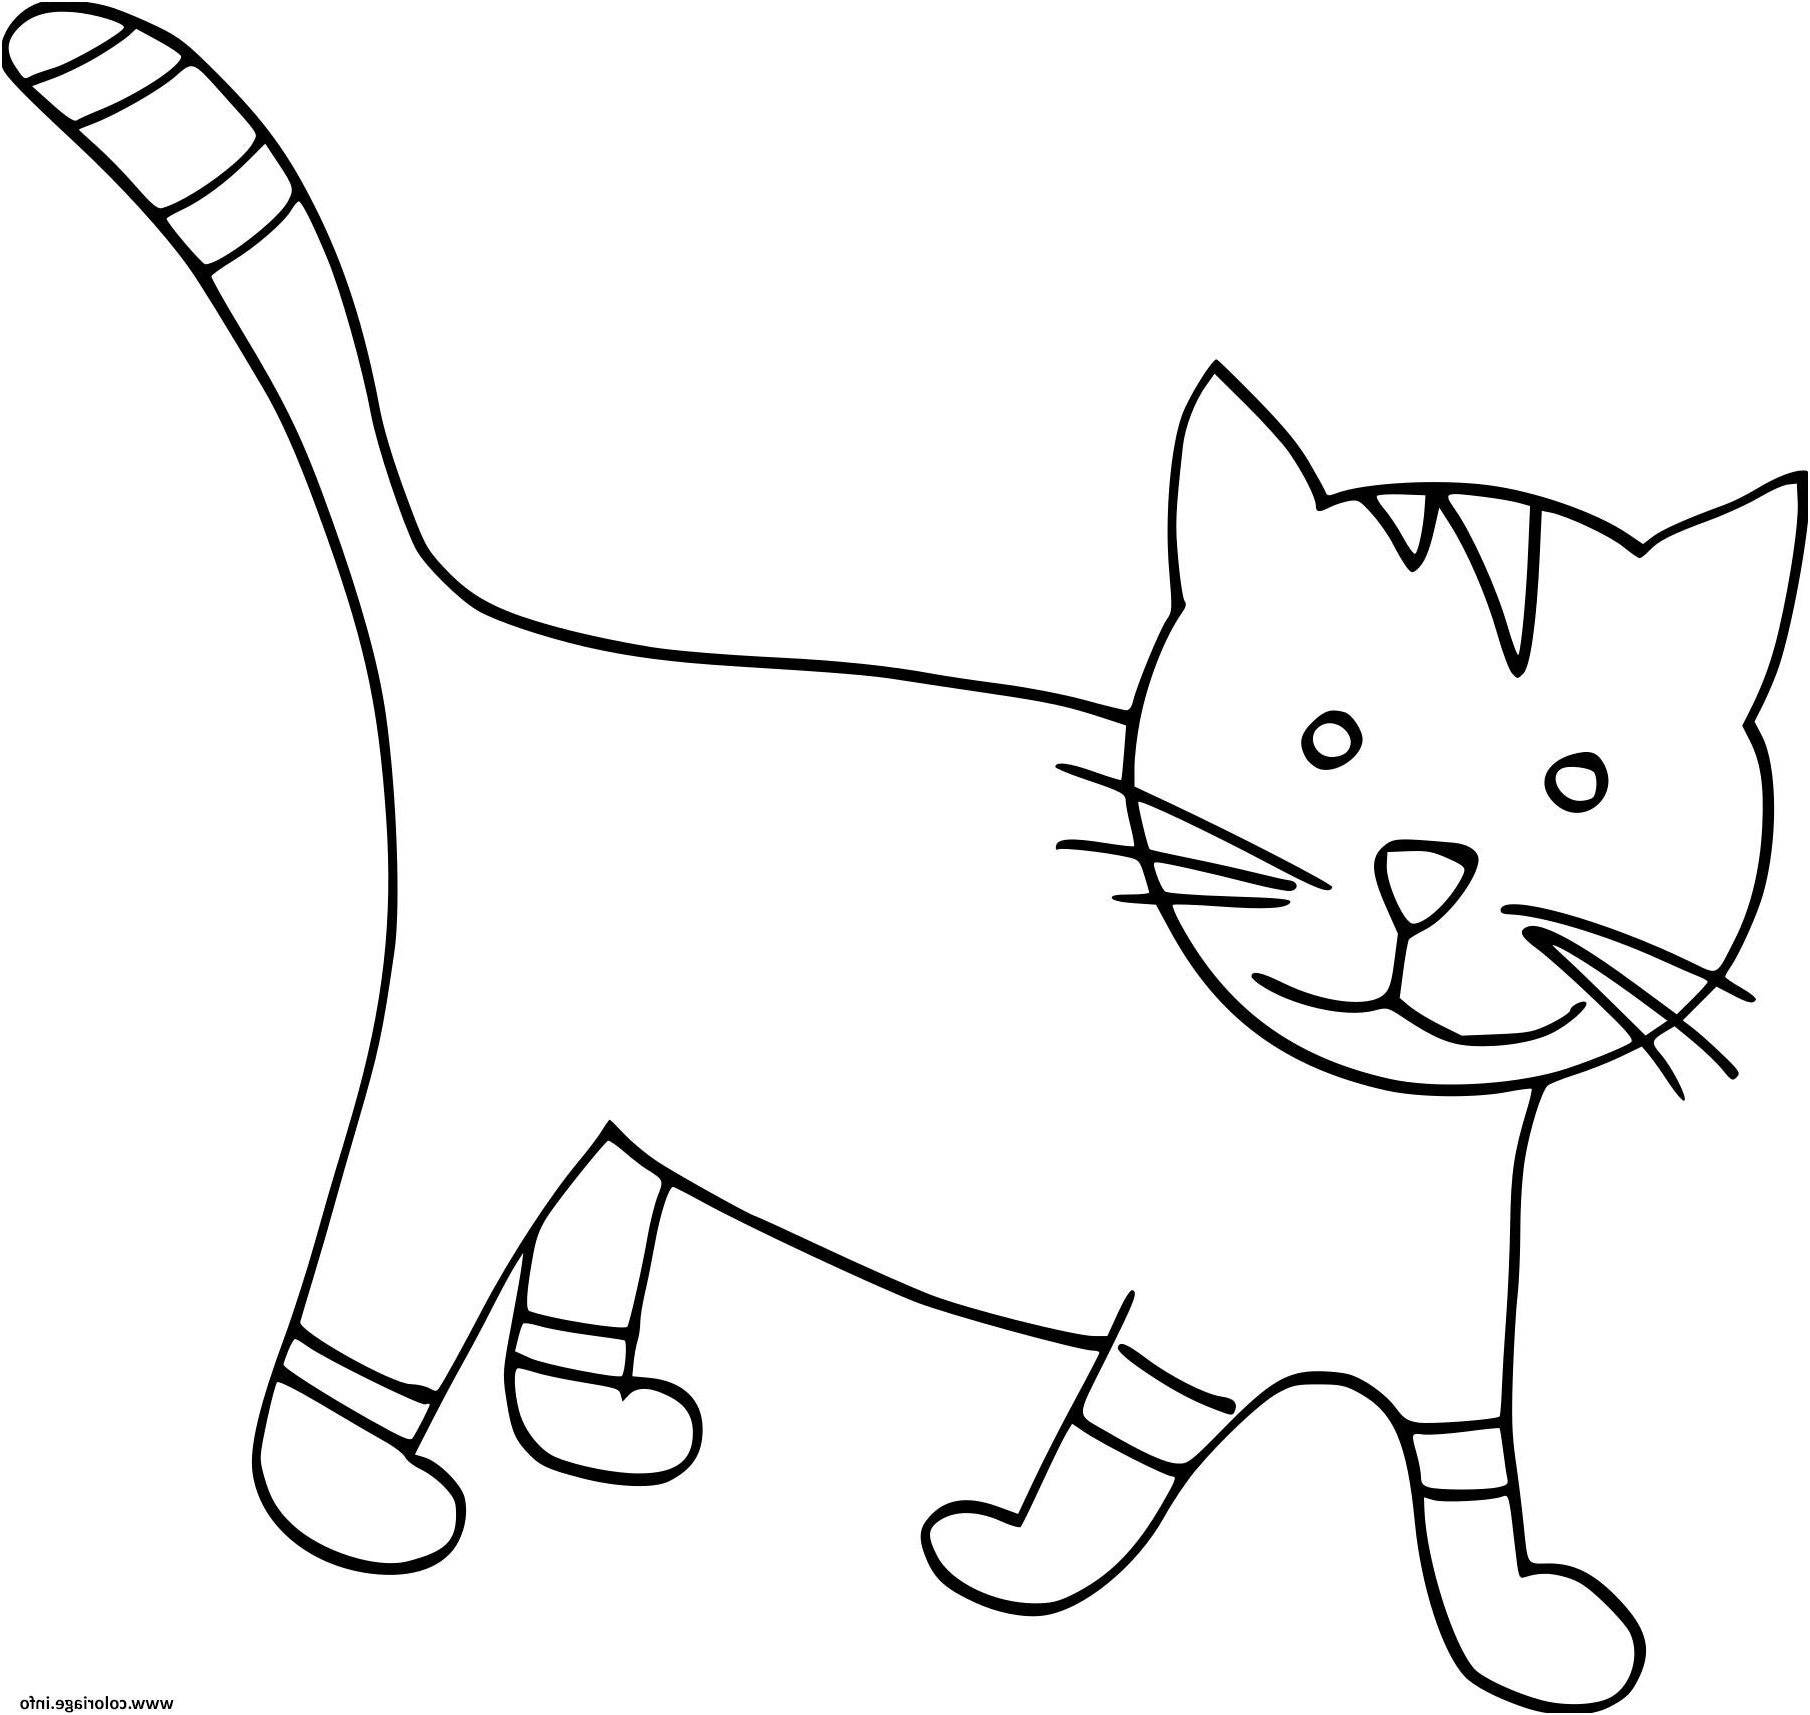 7 dessin de chat facile imprimer